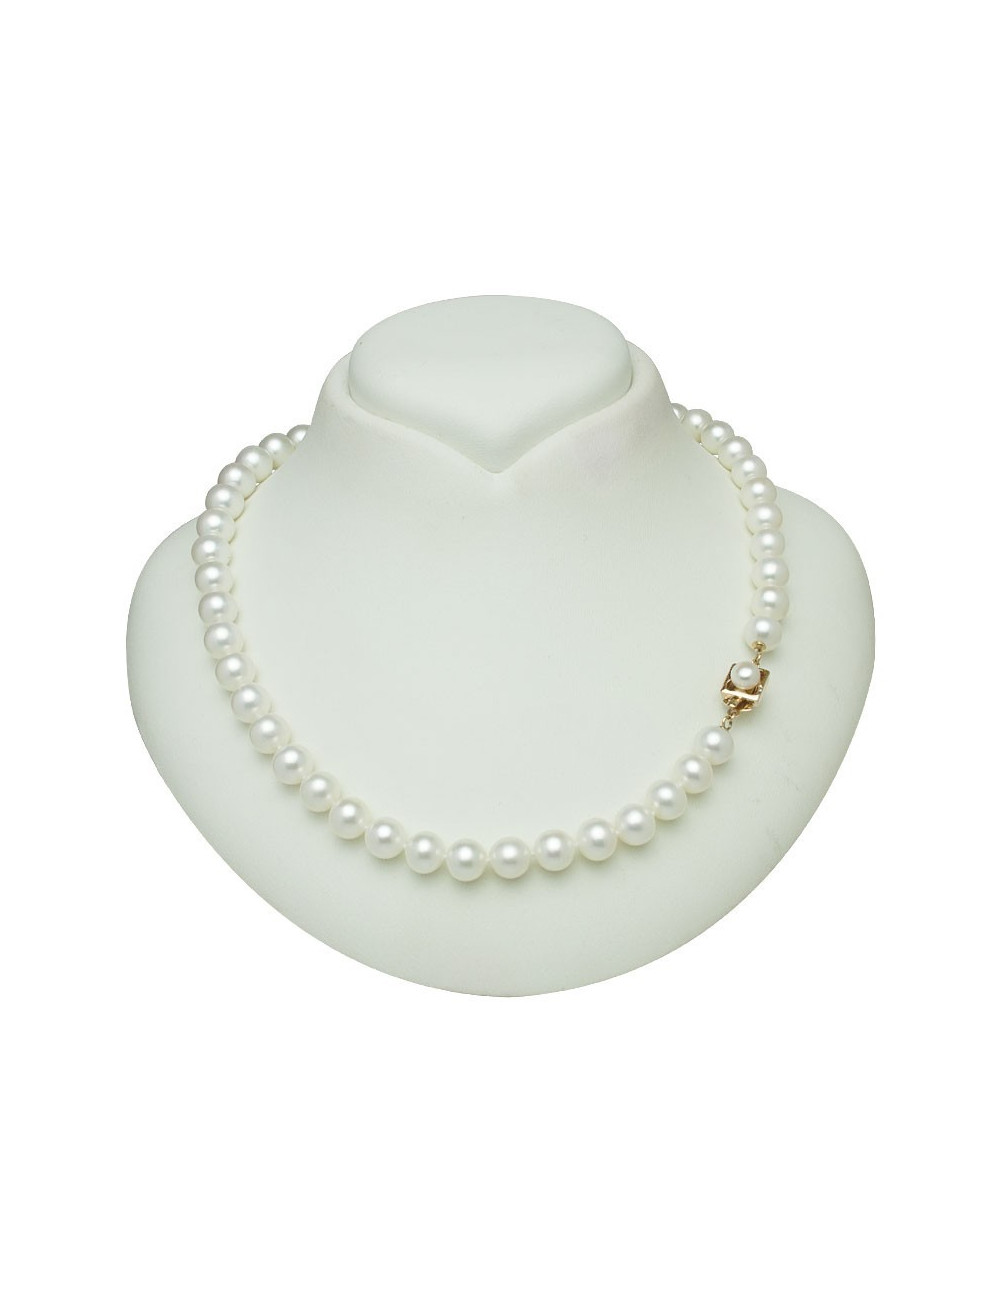 Golden necklace of unique pearls NO8595G